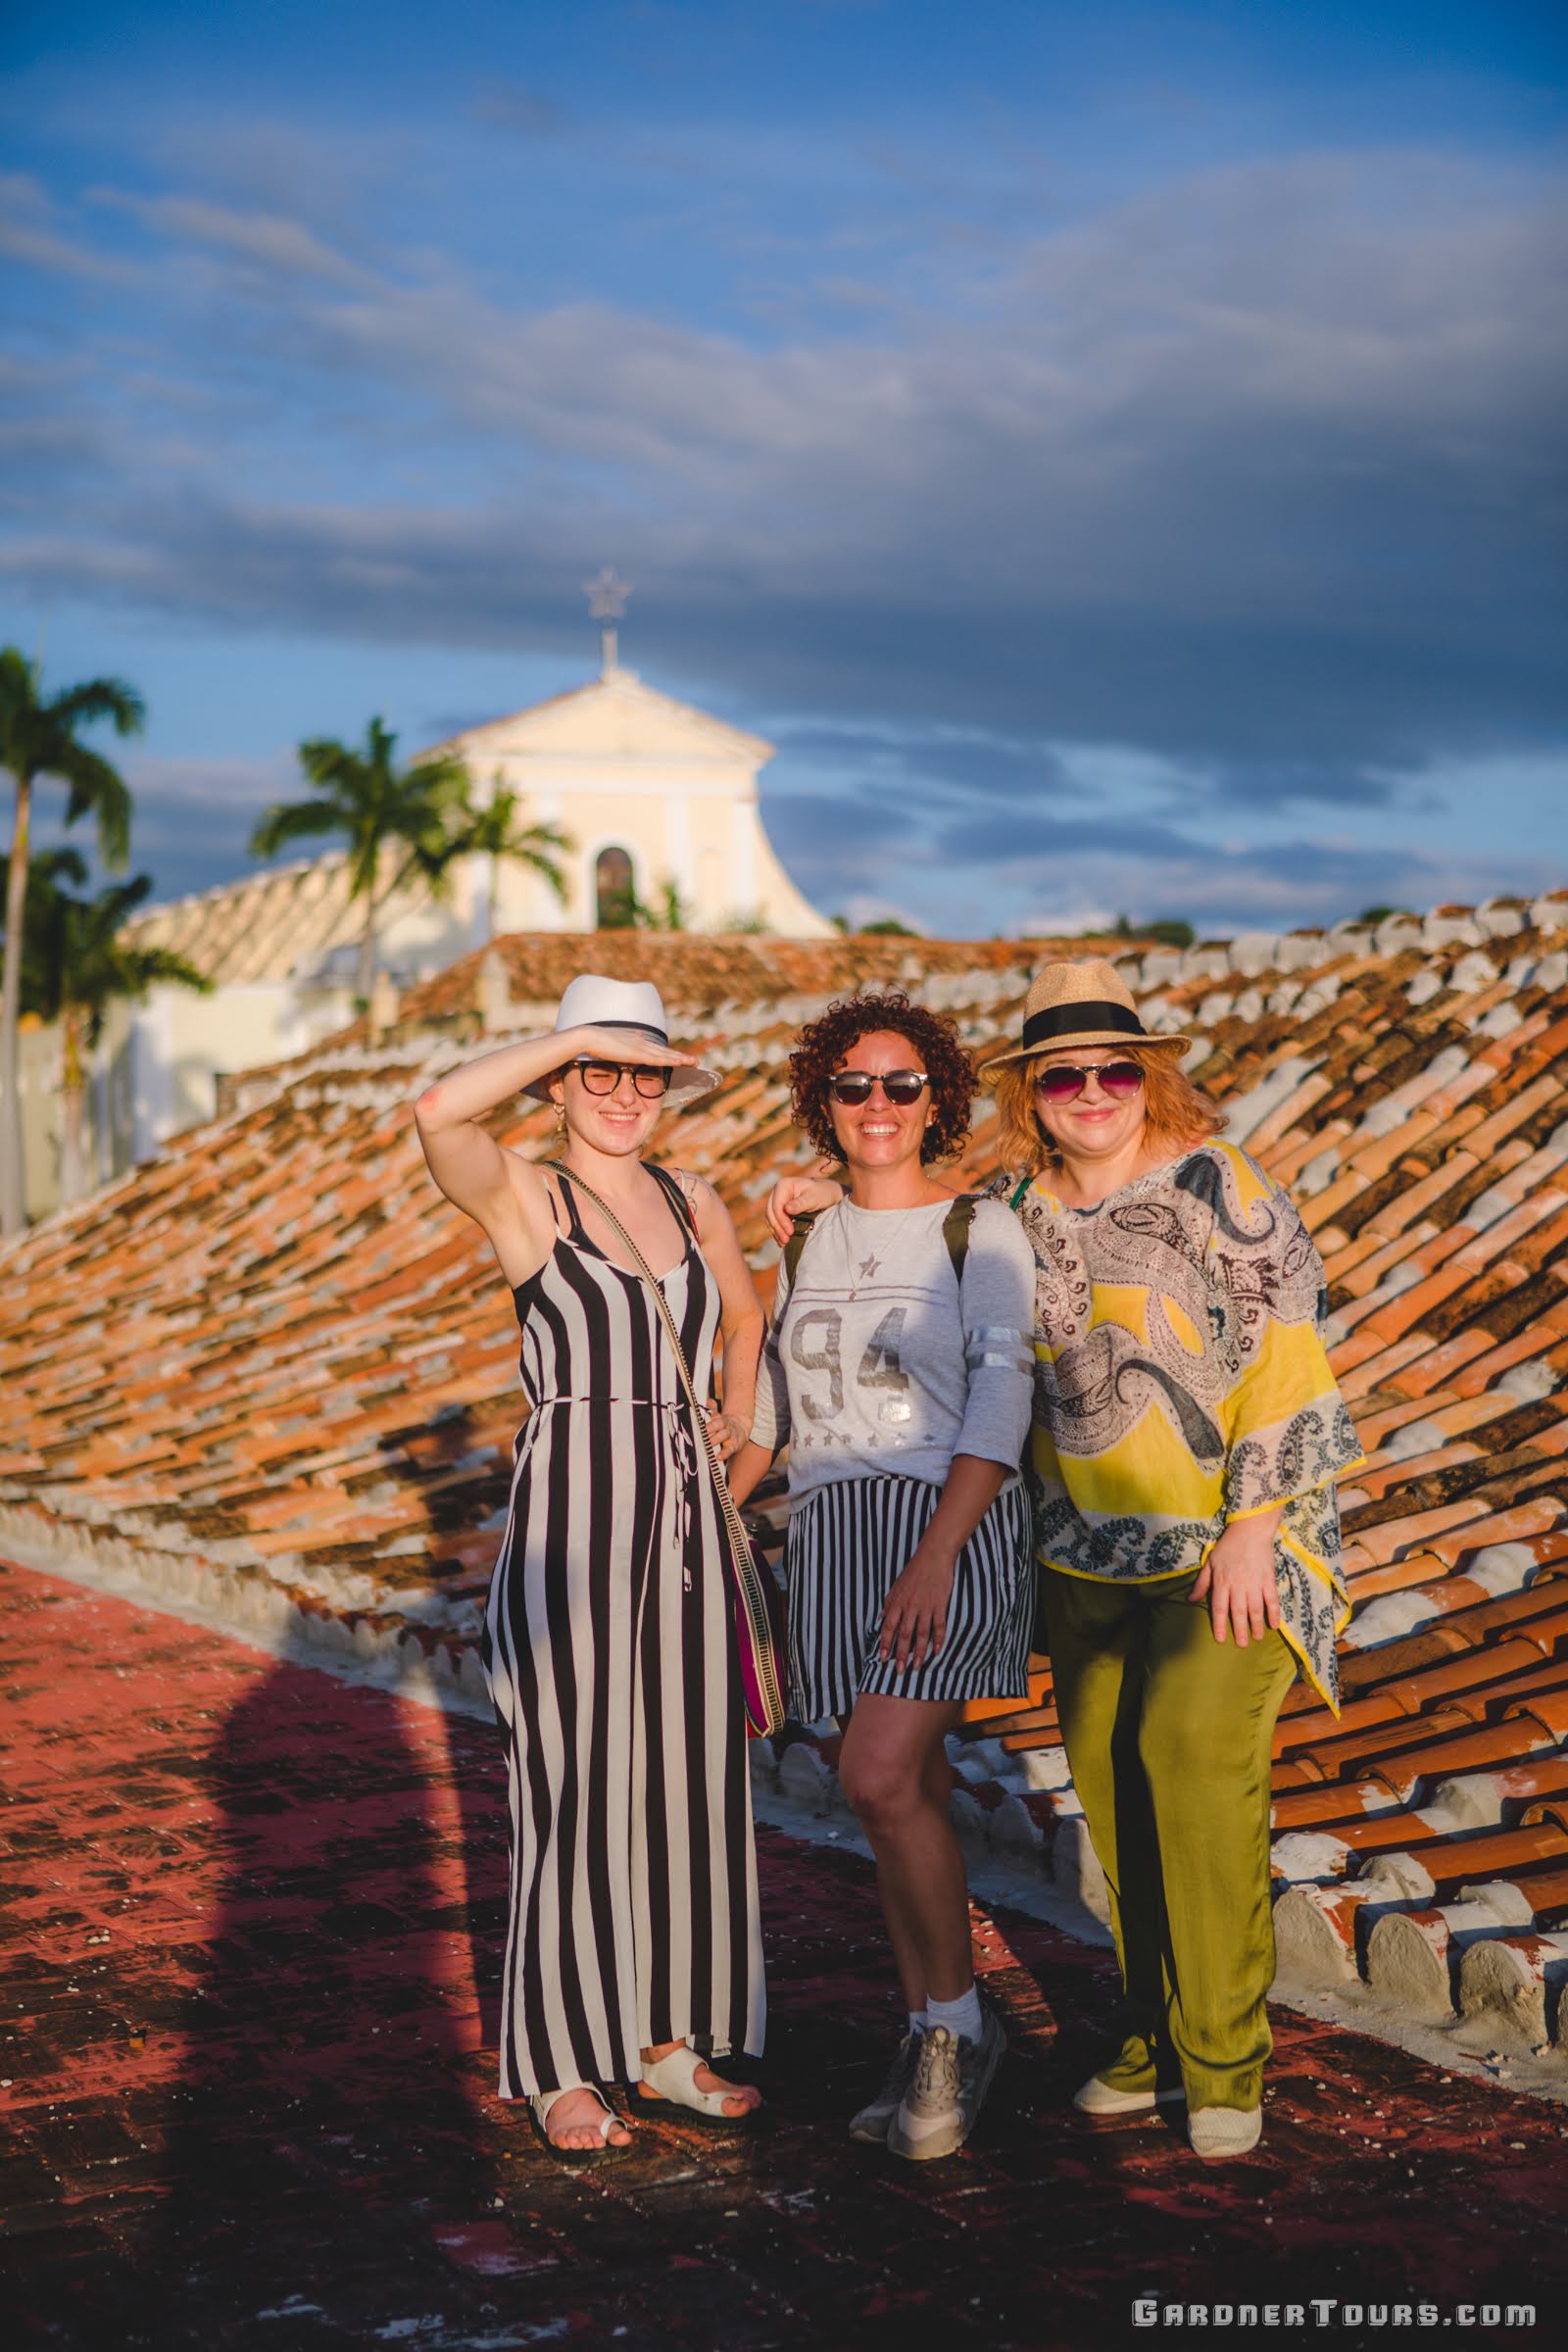 Gardner Tours Cuban Tour Guide Zeydi with two travelers on the rooftop of the Palacio de Cantero in Trinidad Sancti Spiritus Cuba